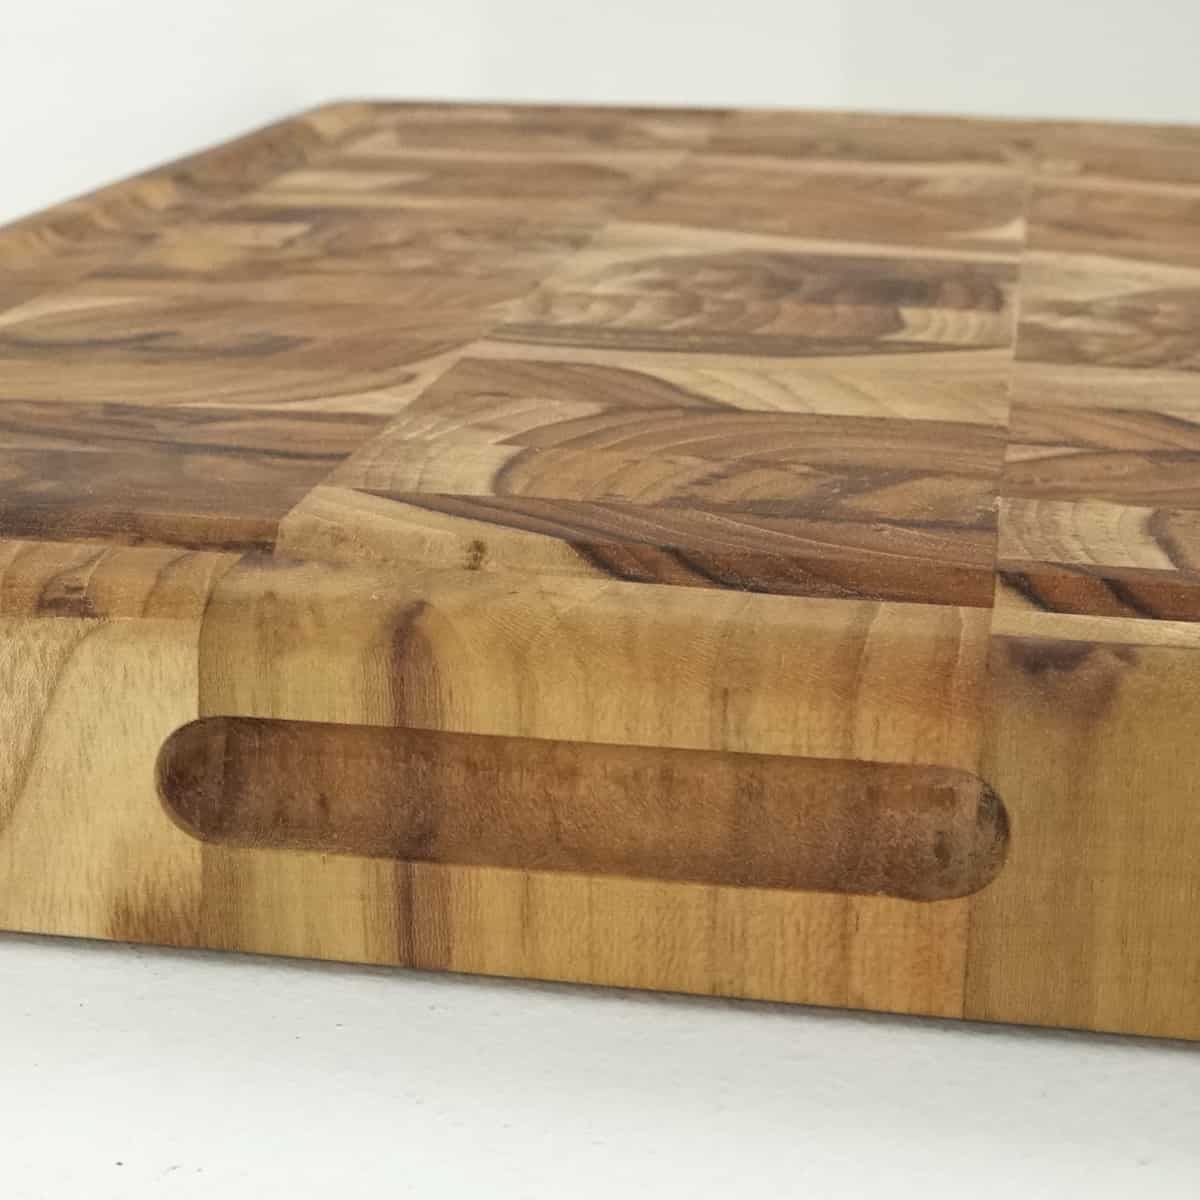  End Grain Wood cutting board - Wood Chopping block